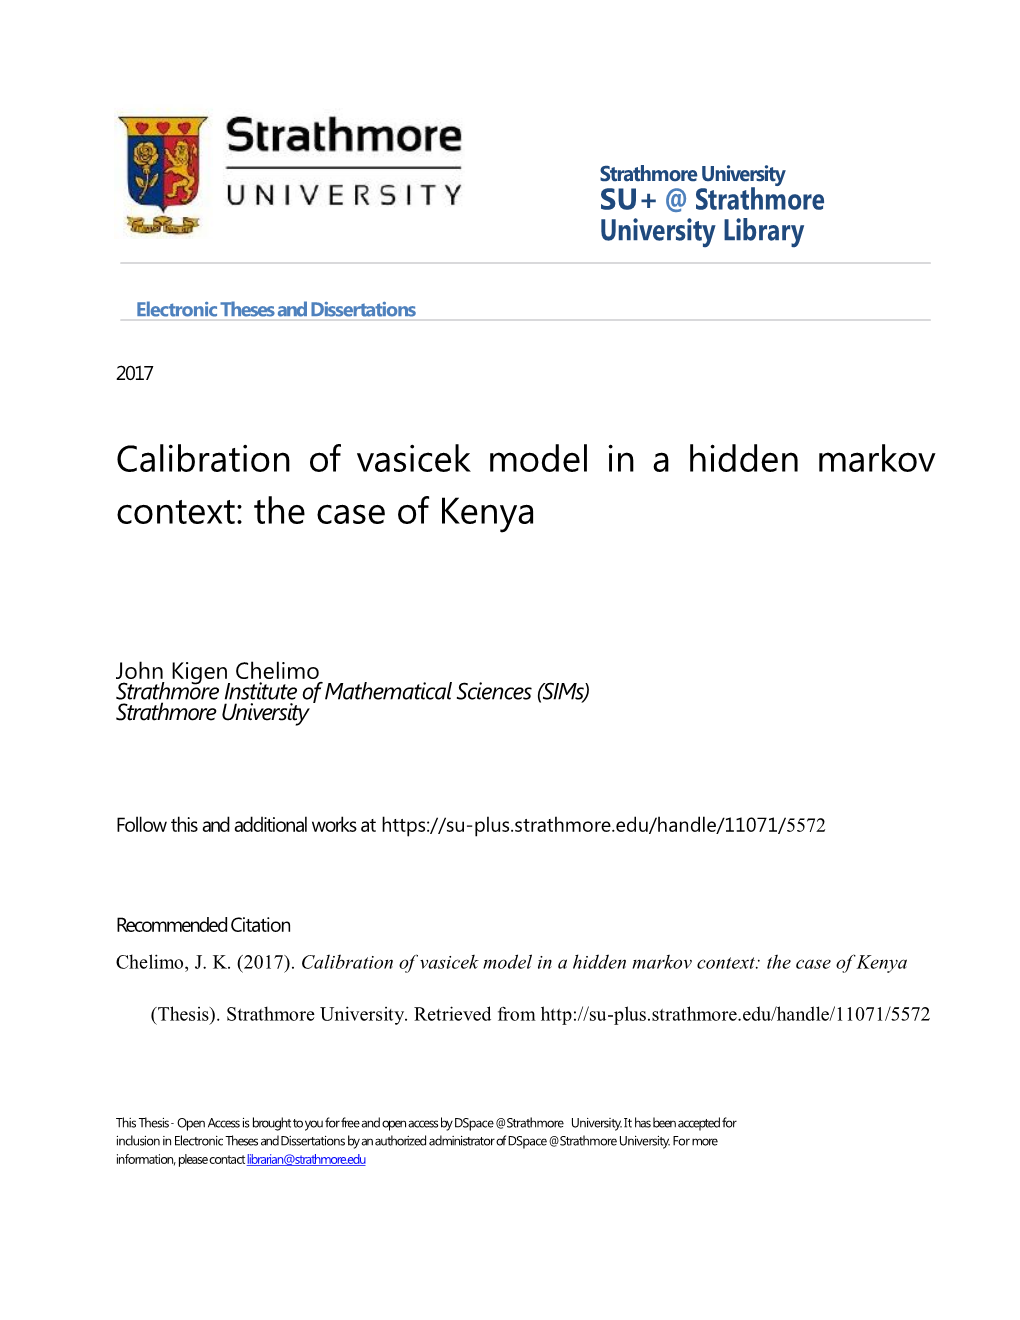 Calibration of Vasicek Model in a Hidden Markov Context: the Case of Kenya